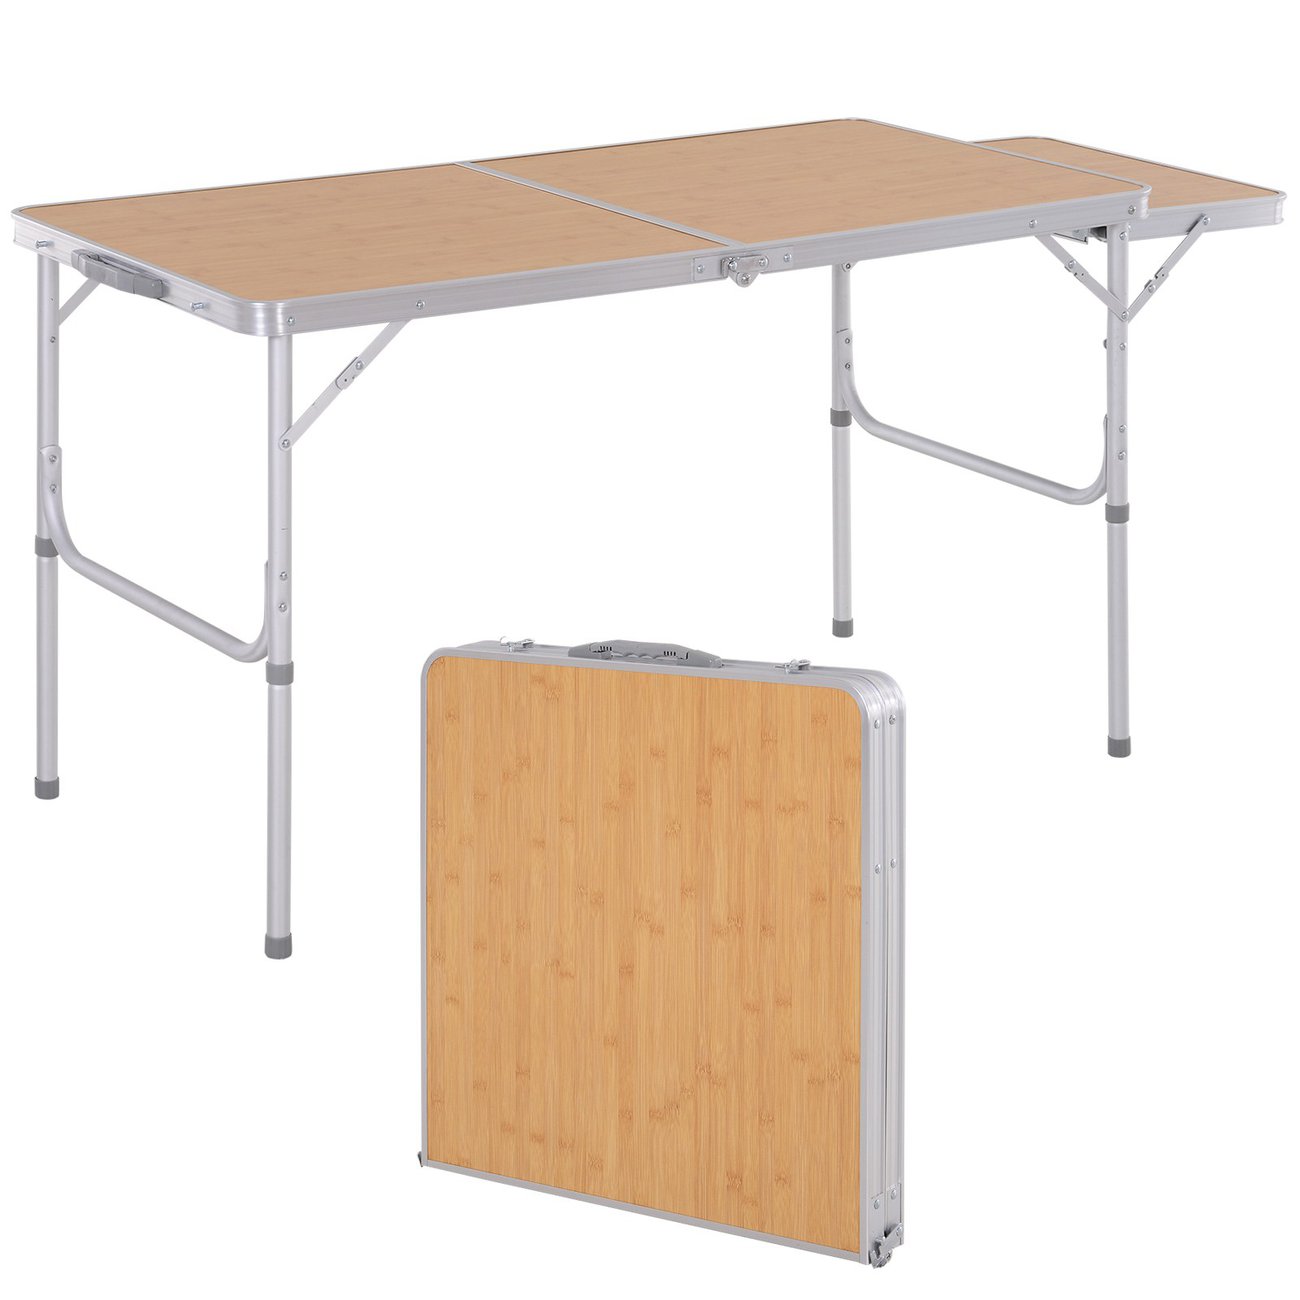 table pliante table de camping table de jardin avec rallonge hauteur reglable aluminium mdf imitation bambou 1 v4